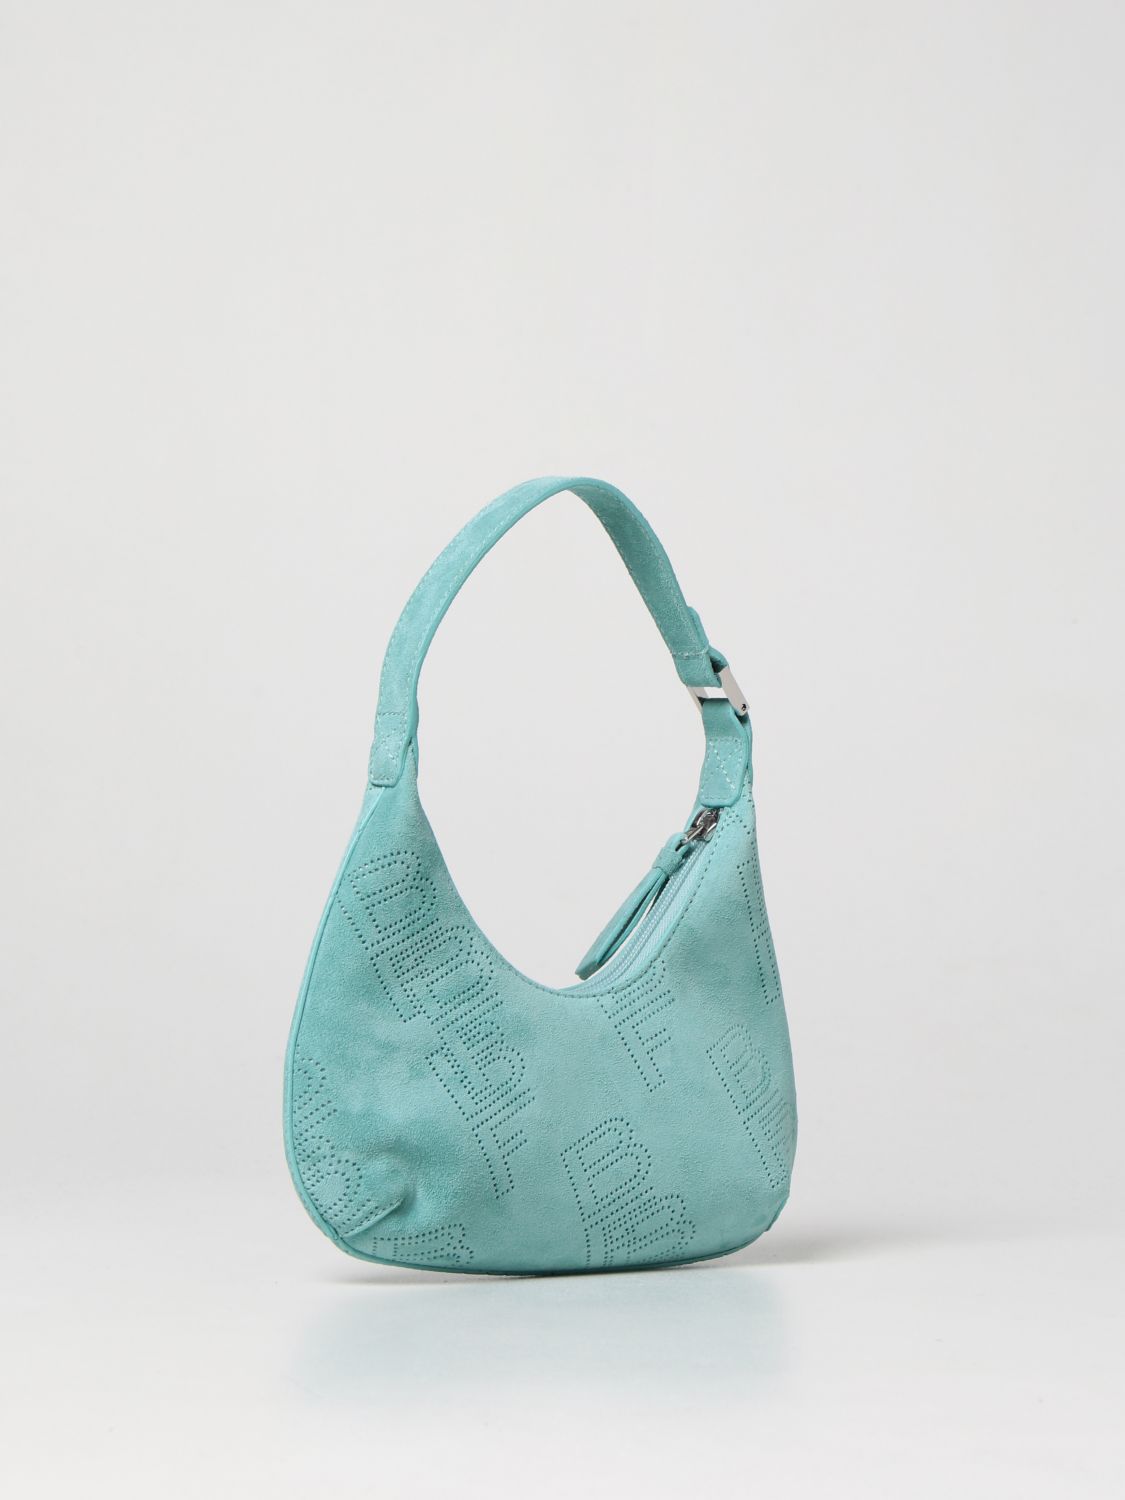 Suede grey or aqua bag